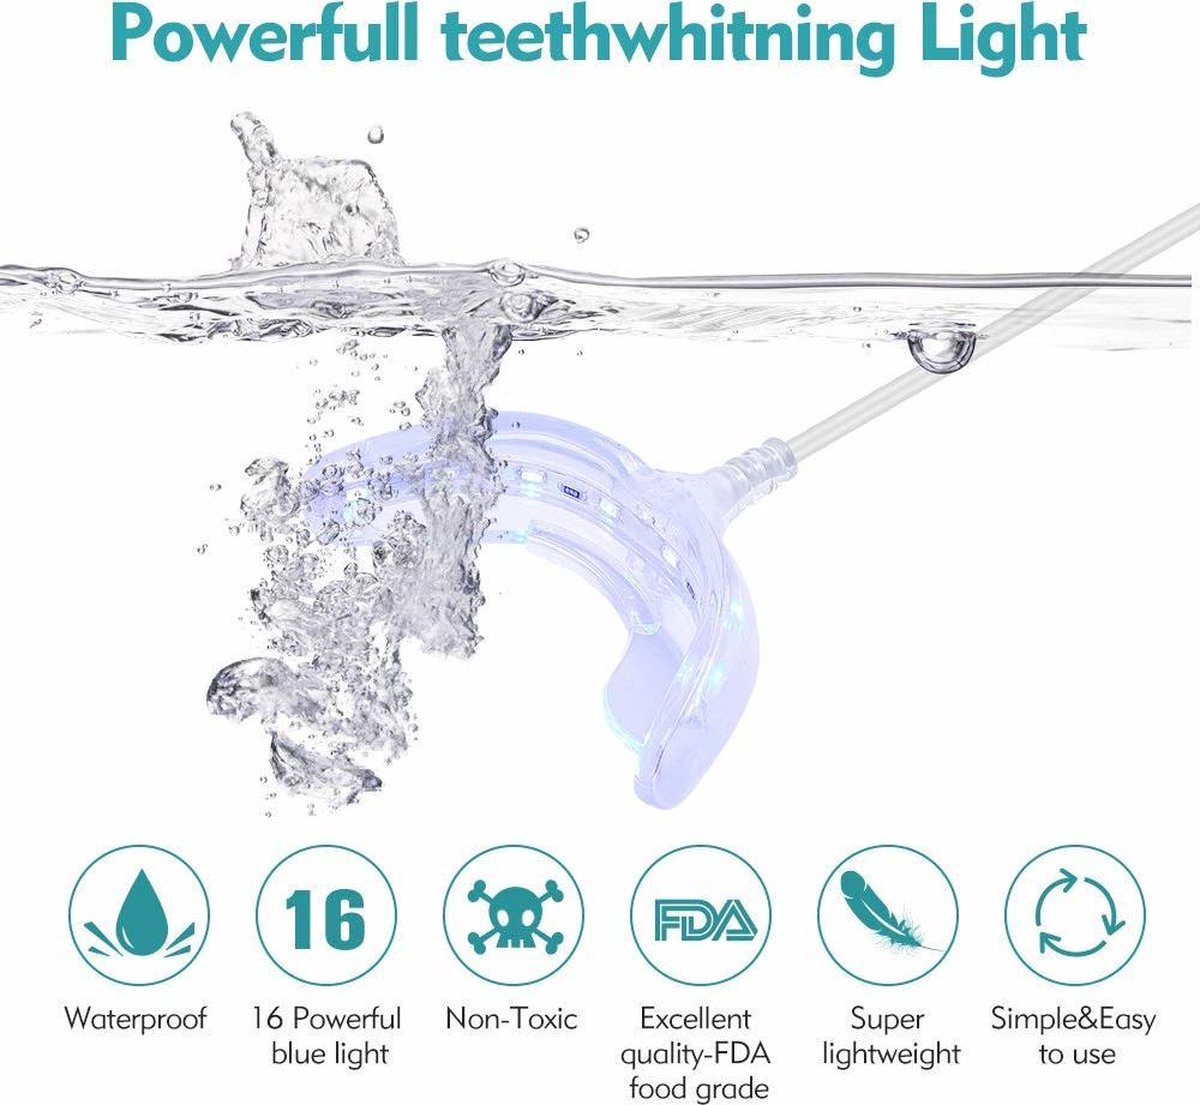 Pro-Care Tandenbleker 16 LEDS koud blauwe licht-technologie - Easy Breath Ventilation -Gum Safe - USB